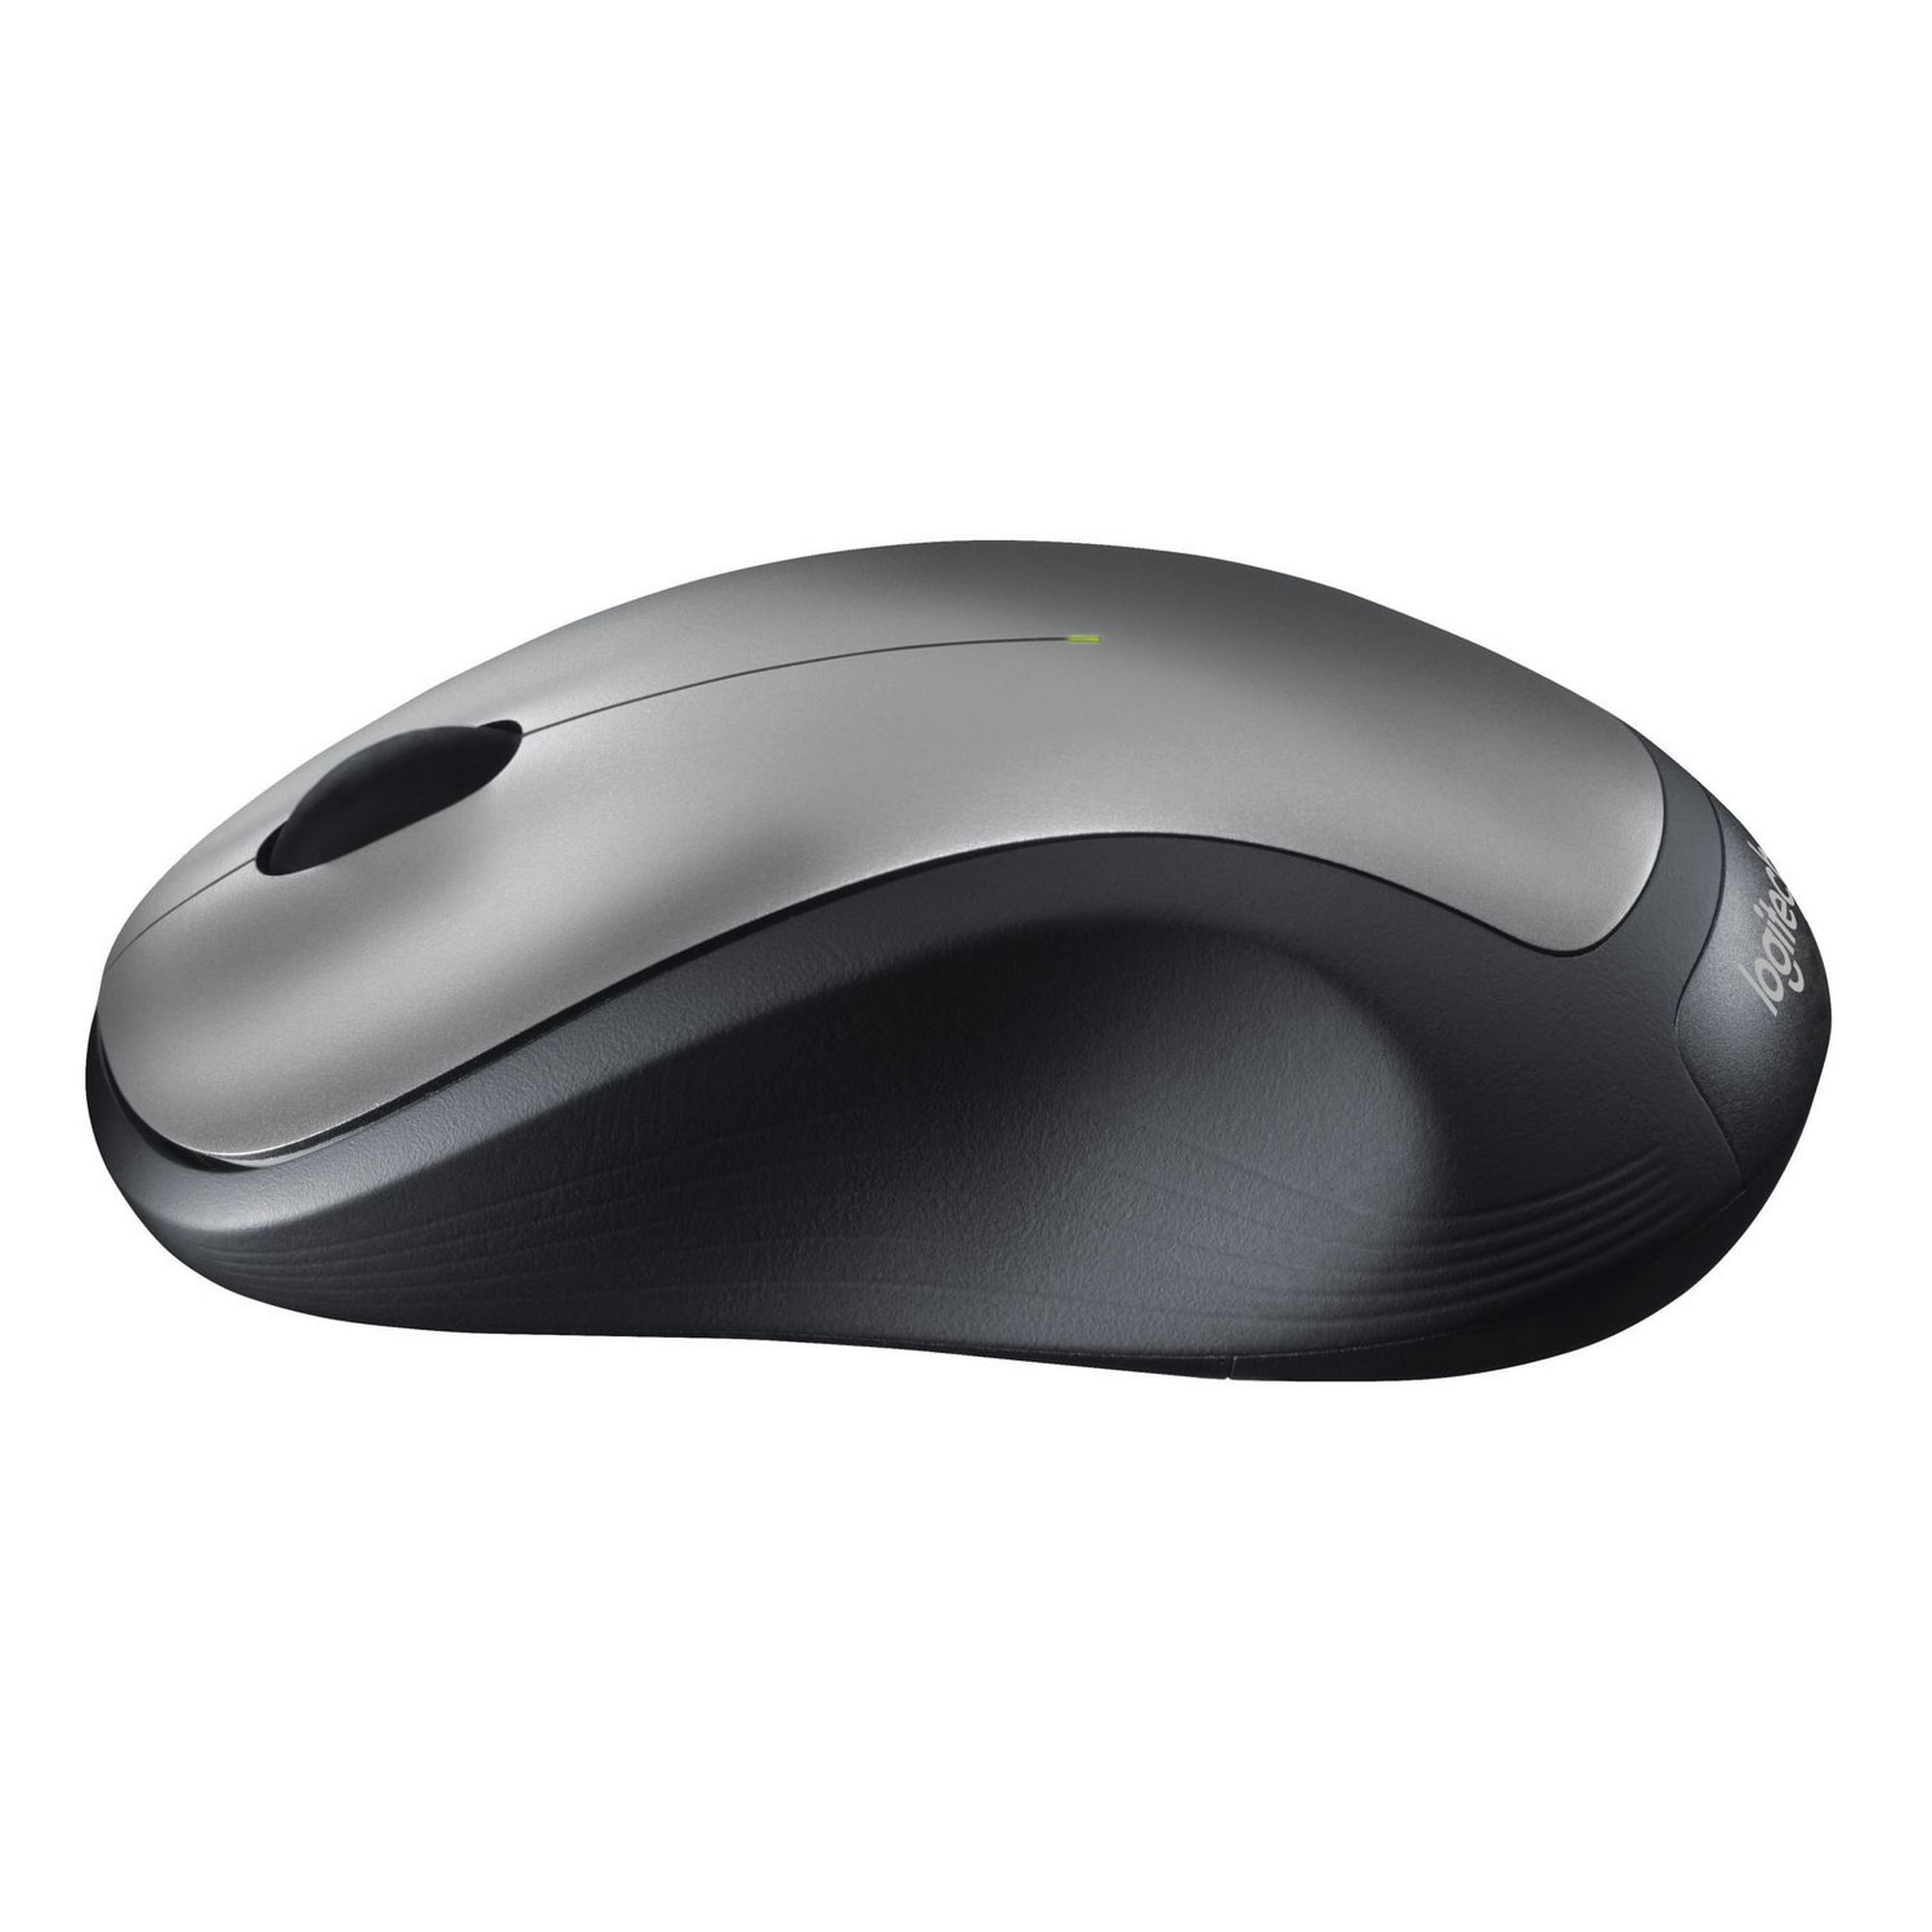 Logitech Full-Size Wireless Mouse, Full-size wireless mouse 